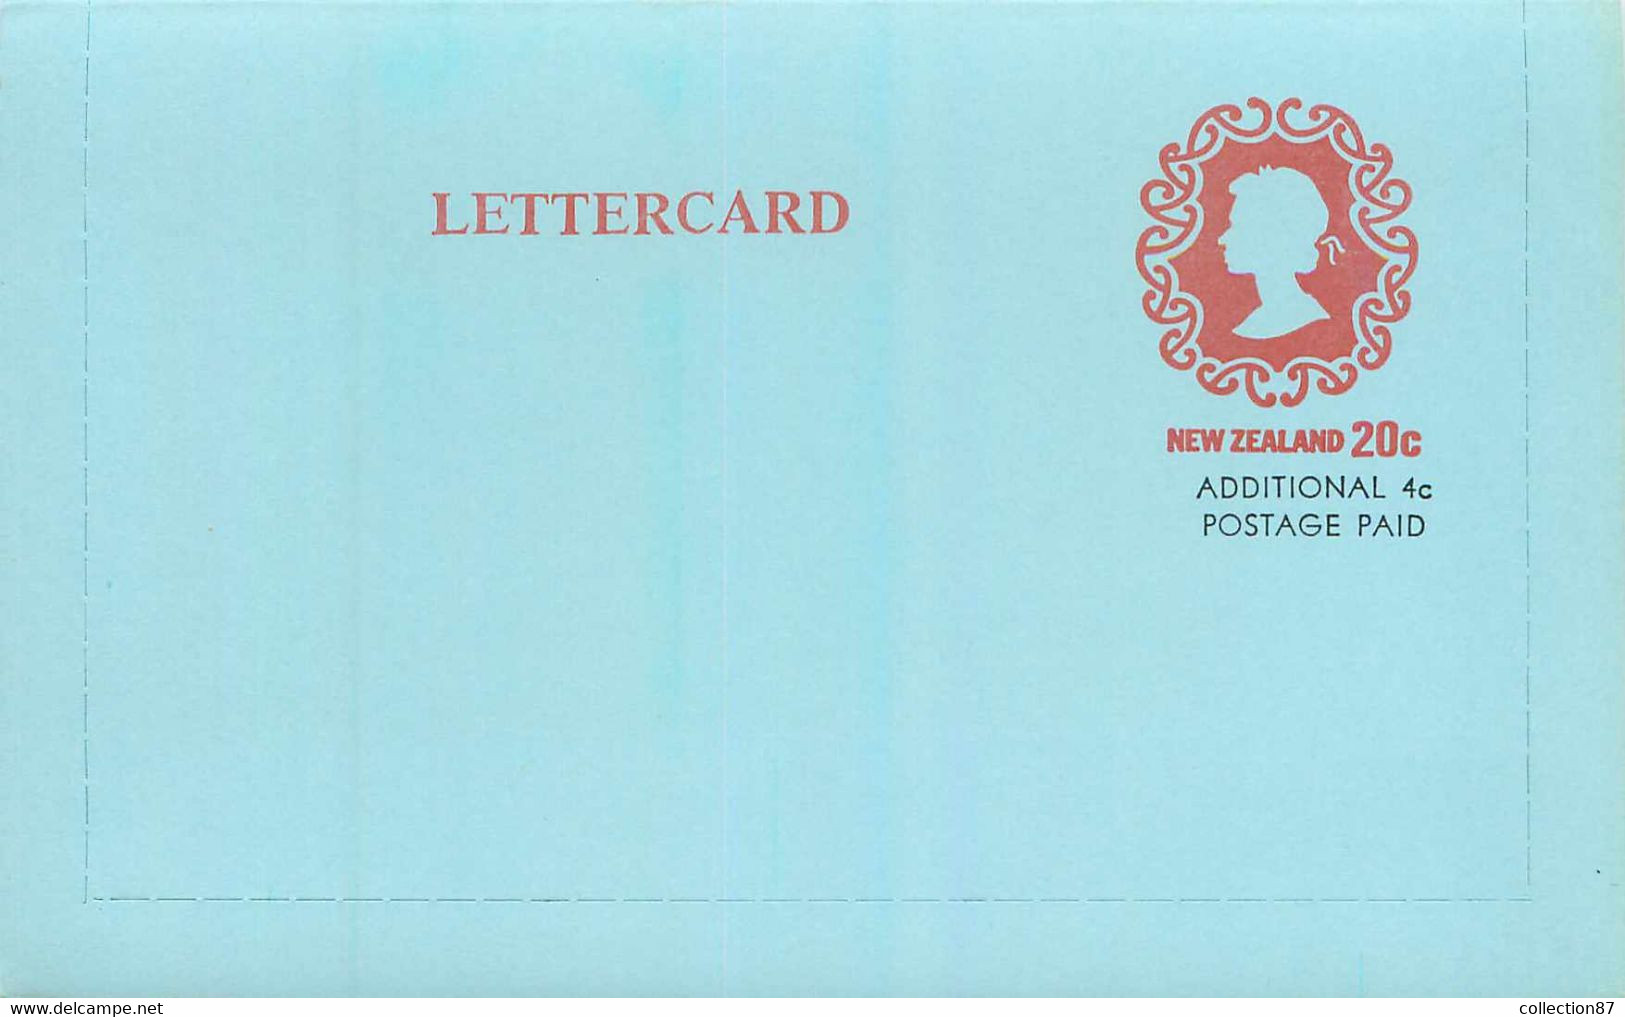 NEW ZEALAND - LETTERCARD 20c Additional 4c Postage Paid < ENTIER POSTAL NOUVELLE ZELANDE 20c + 4 Cent - QUEEN ELISABETH - Postal Stationery